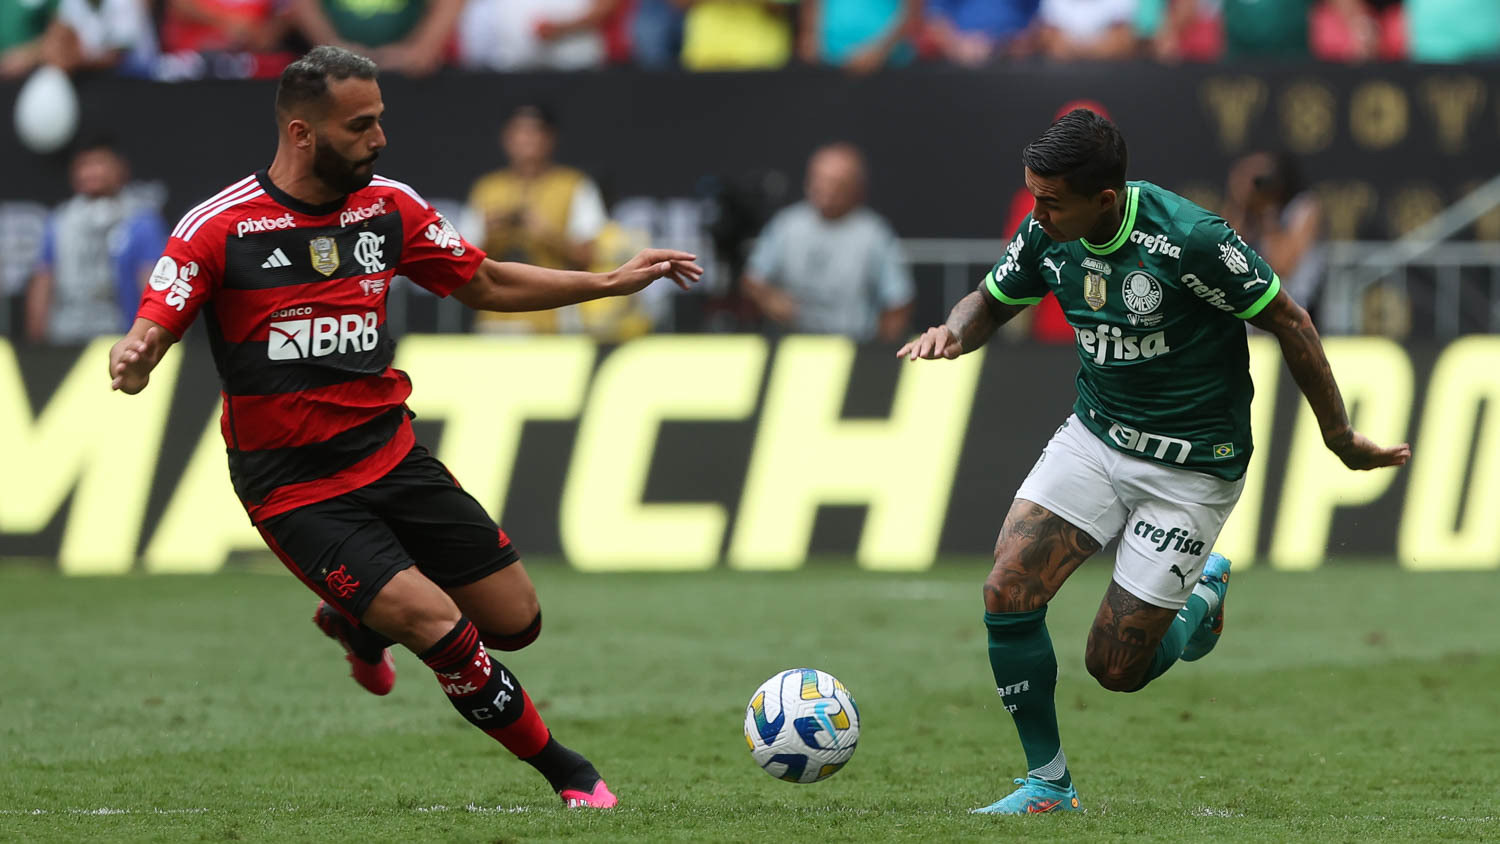 Afinal, o Palmeiras tem vaga garantida no próximo Mundial de Clubes?  Confira!